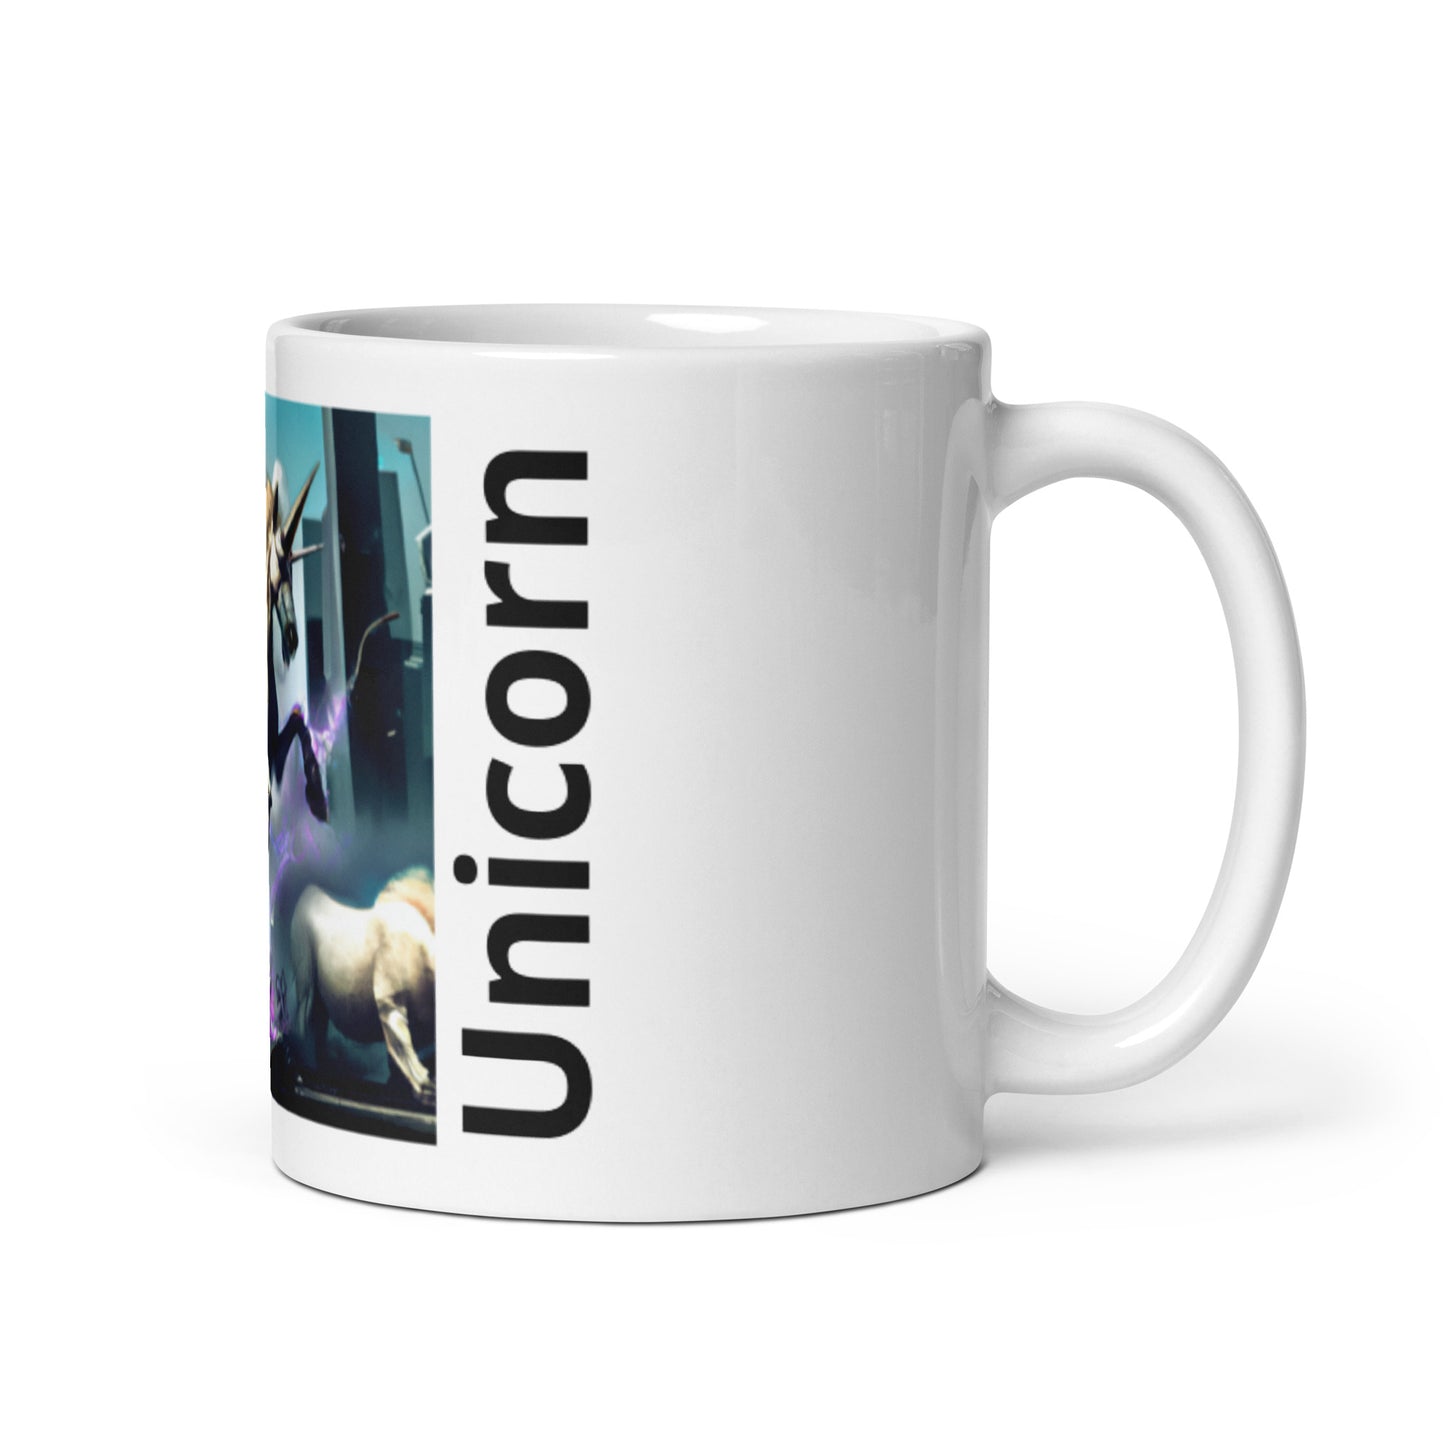 Yapple Dapple Powerful Unicorn mug